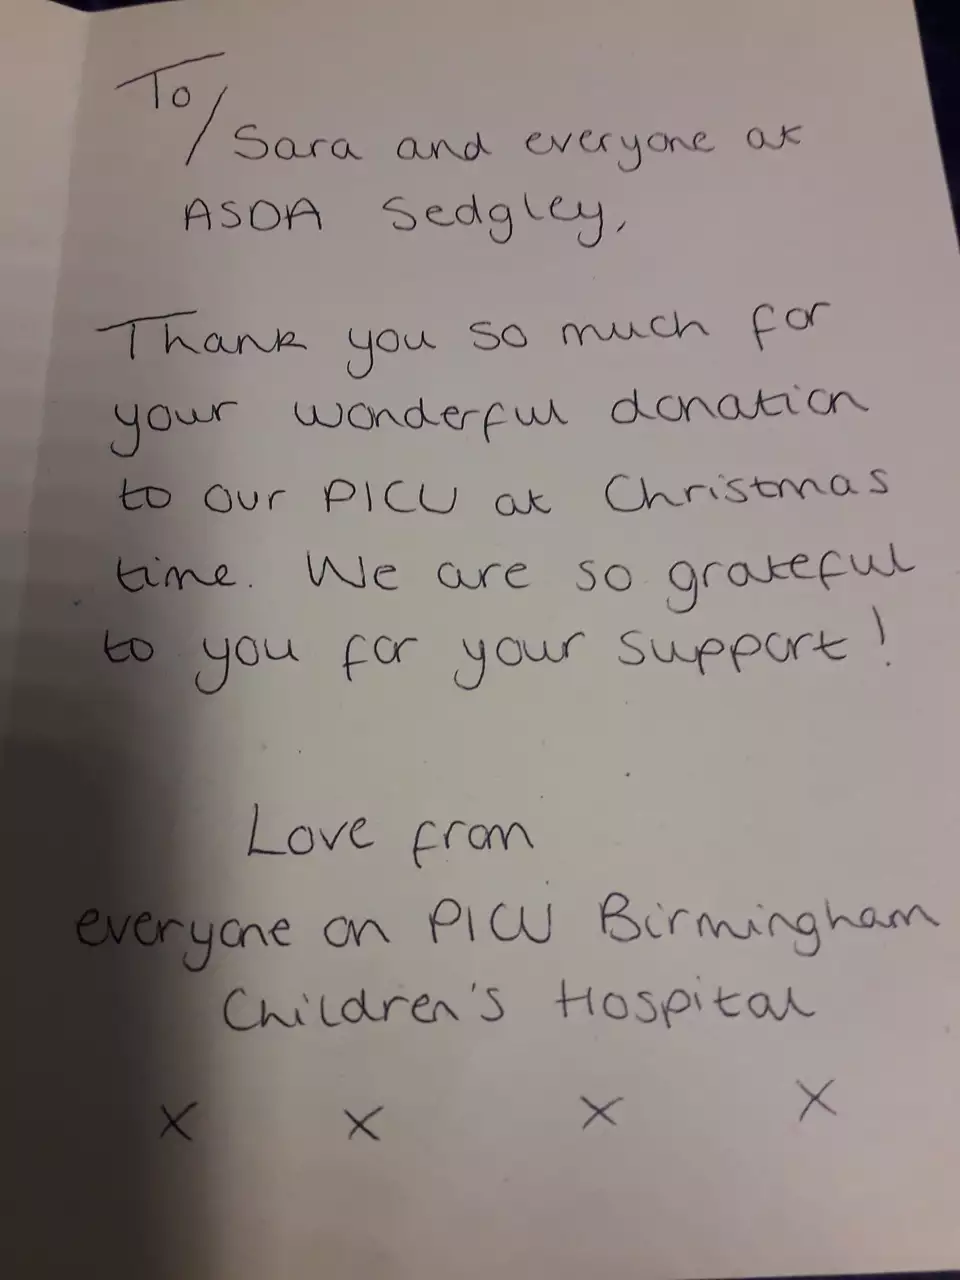 Christmas thanks from children's hospital | Asda Sedgley